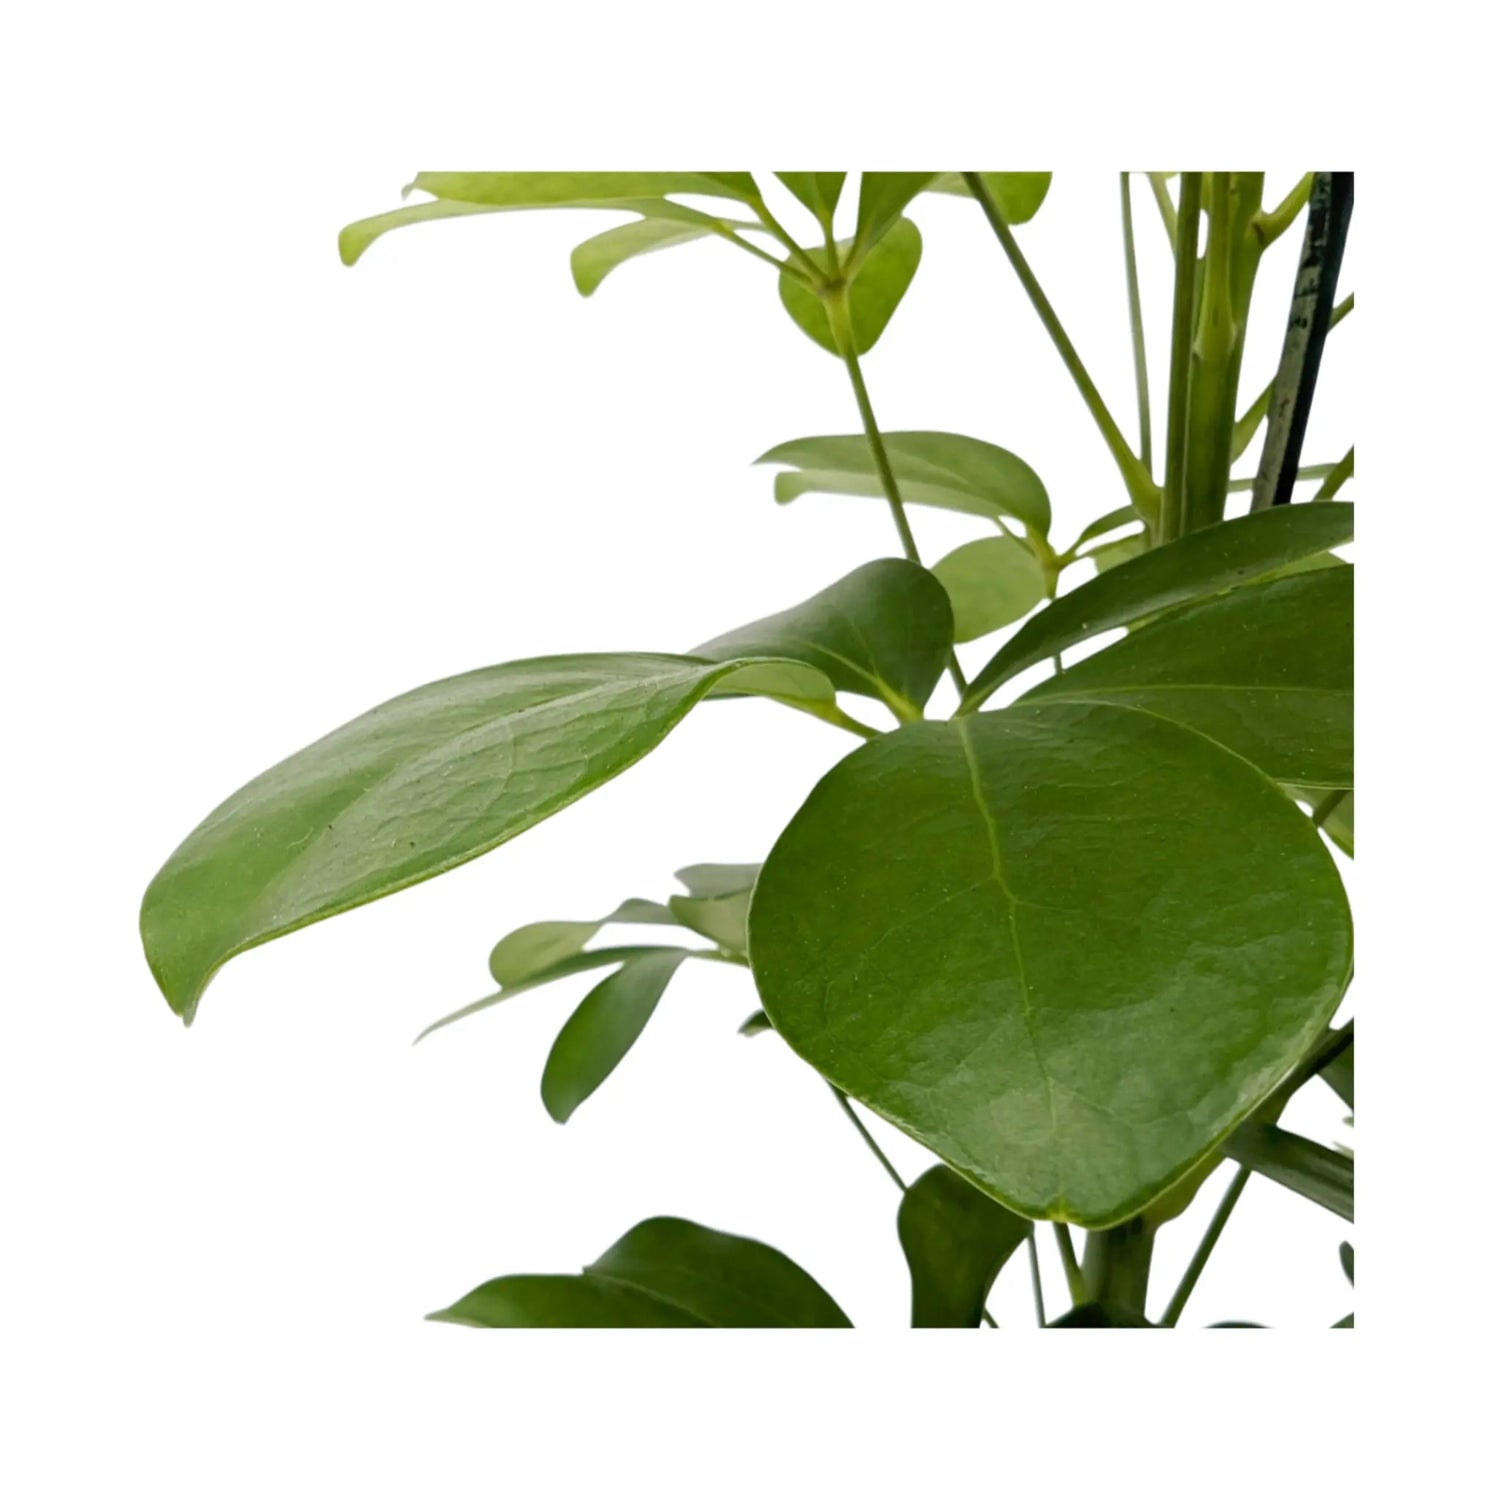 Schefflera Arboricola - Umbrella Tree Leaf Culture